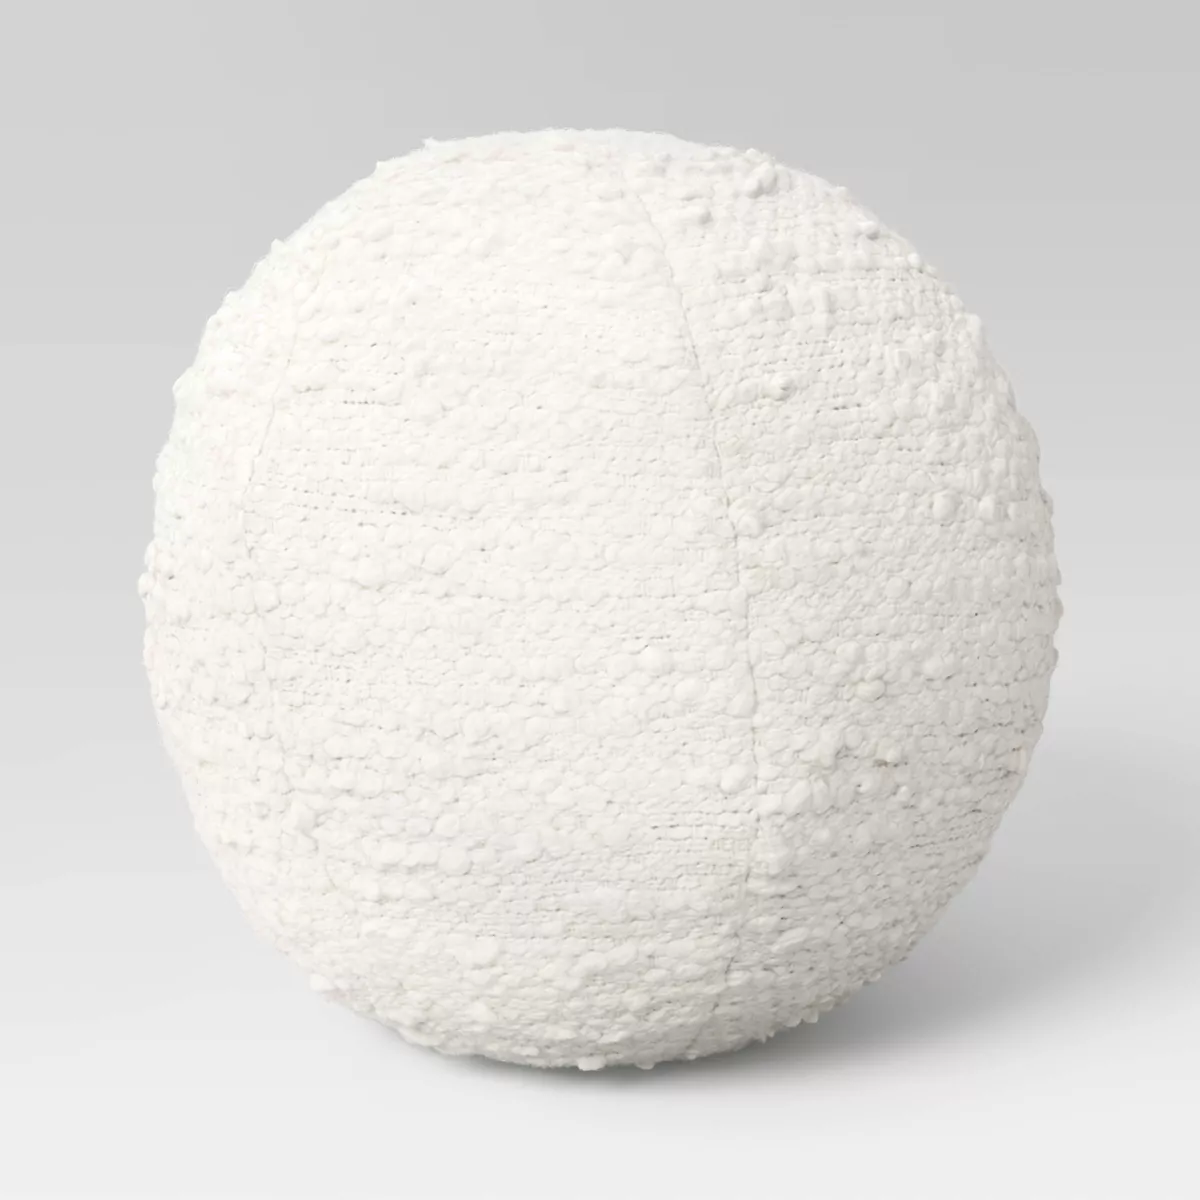 Round sphere pillow